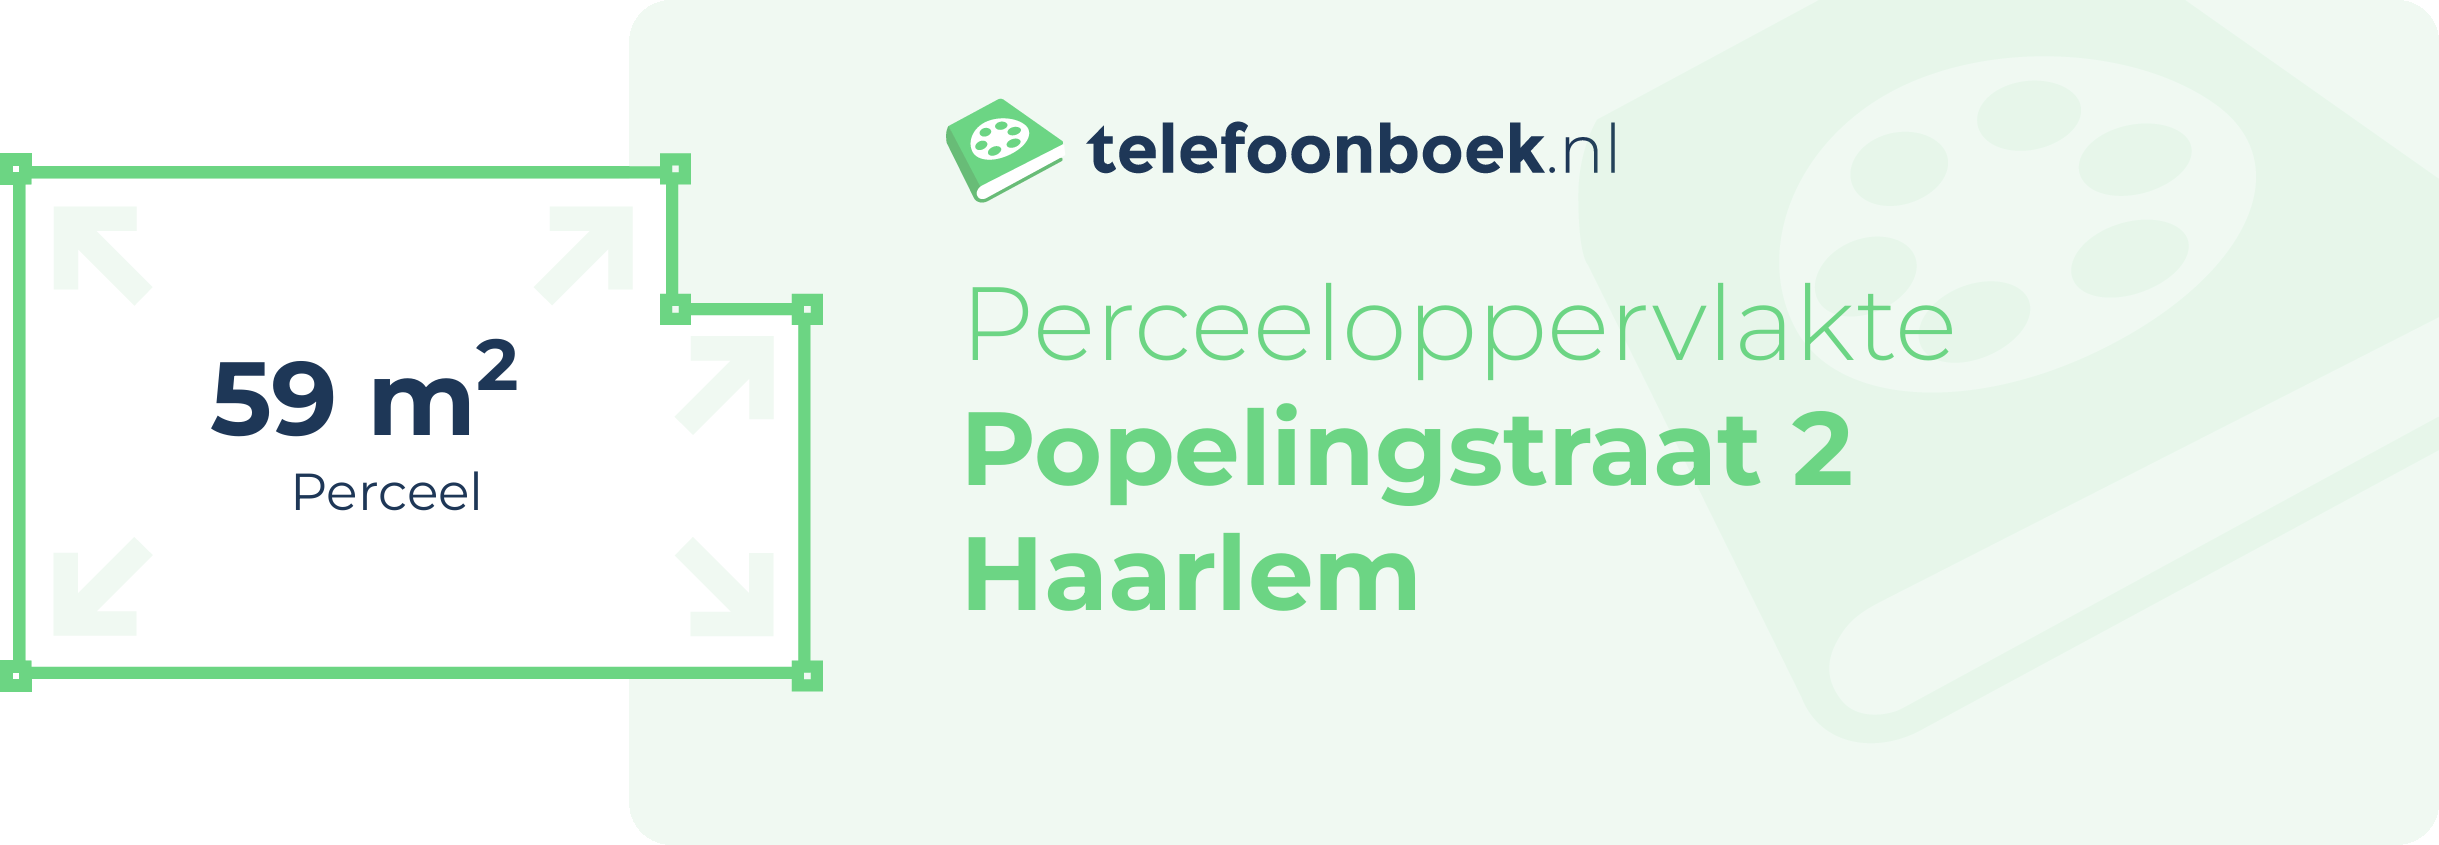 Perceeloppervlakte Popelingstraat 2 Haarlem